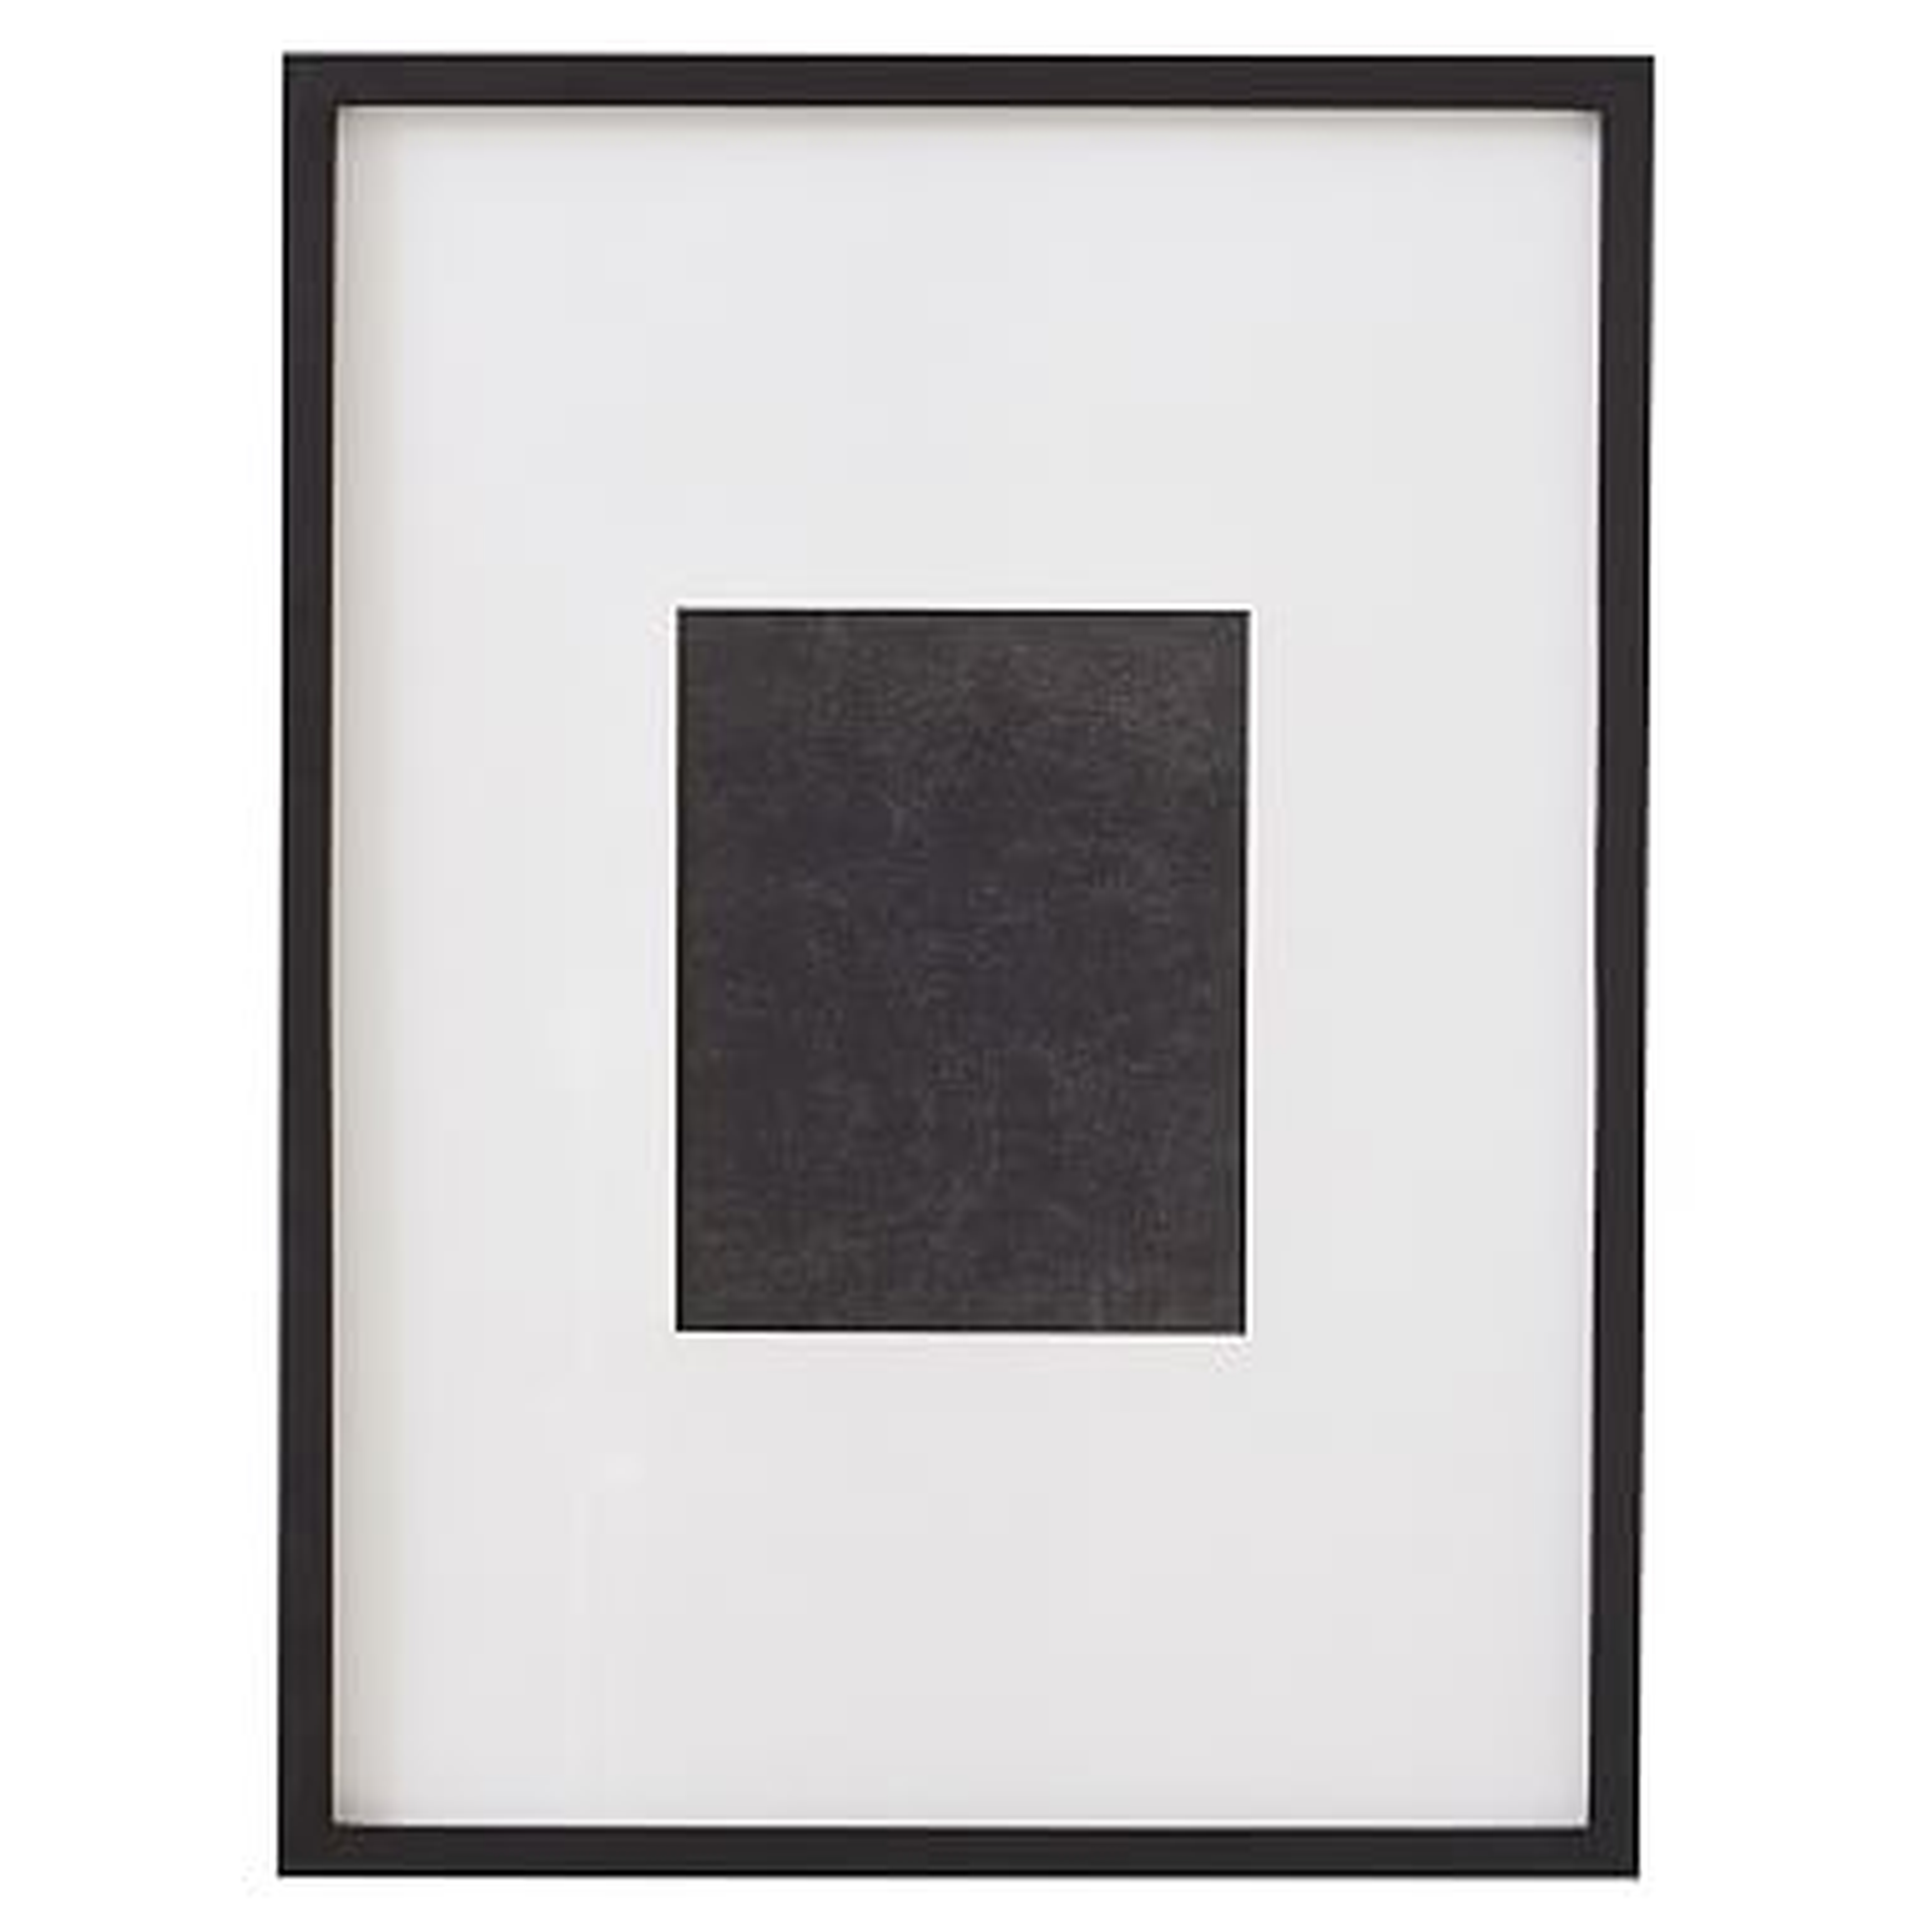 Gallery Frames, 16x20, Black - Pottery Barn Teen